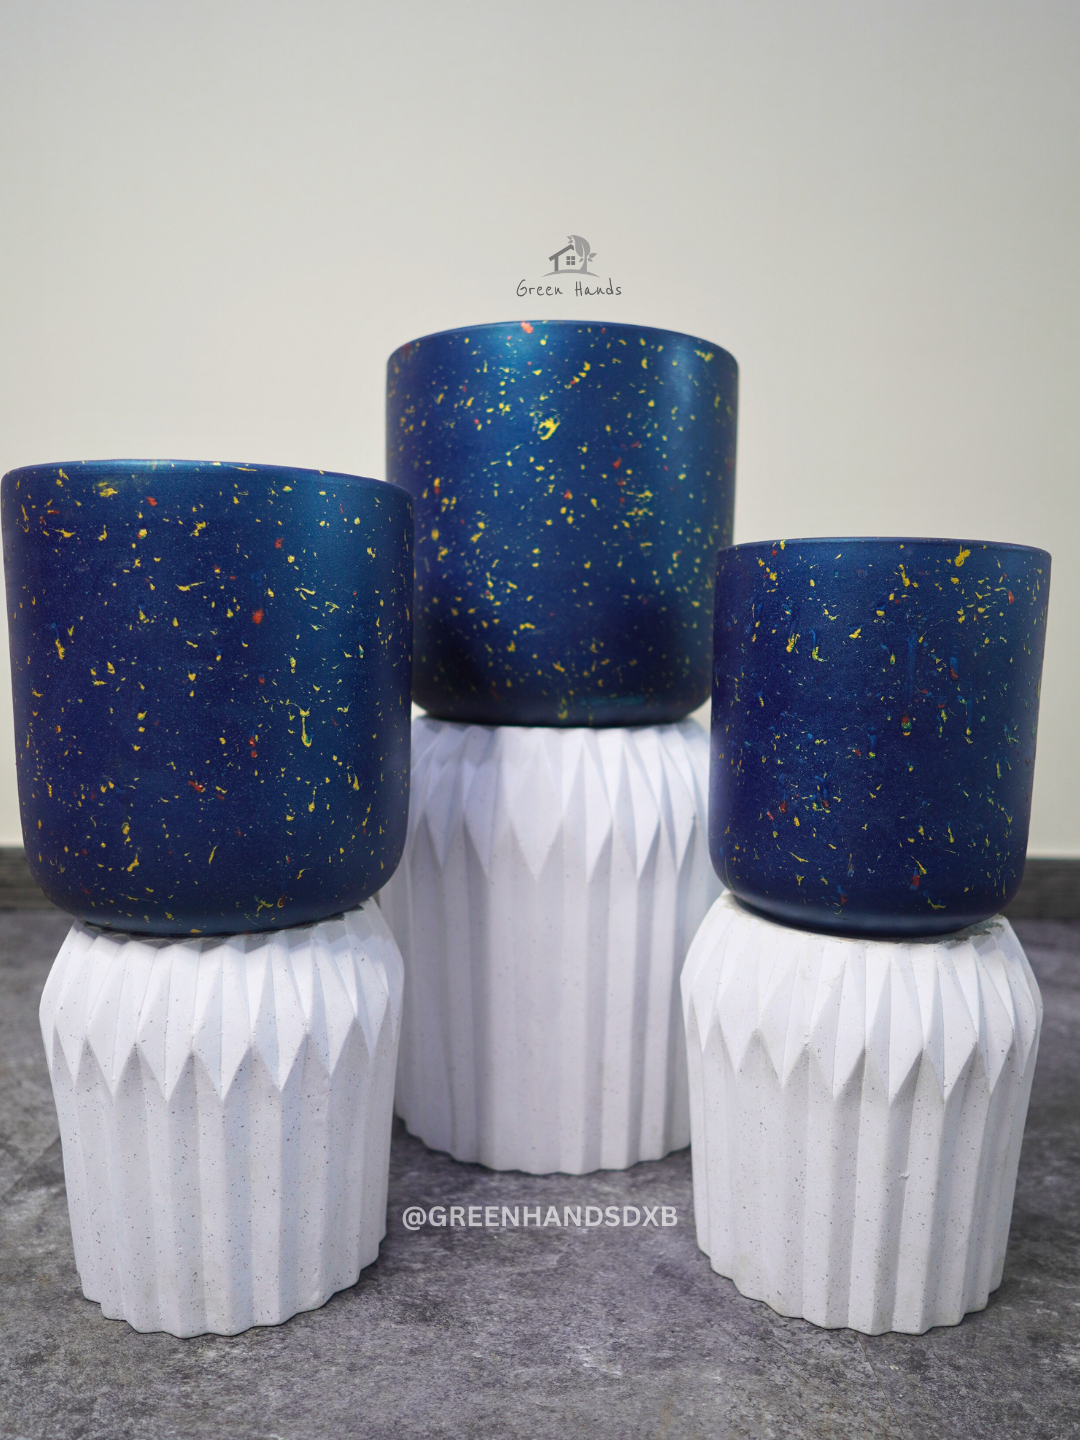 Dracaena Fragrans in Ceramic Pot - Triple Crown: Enhance Your Indoor Space